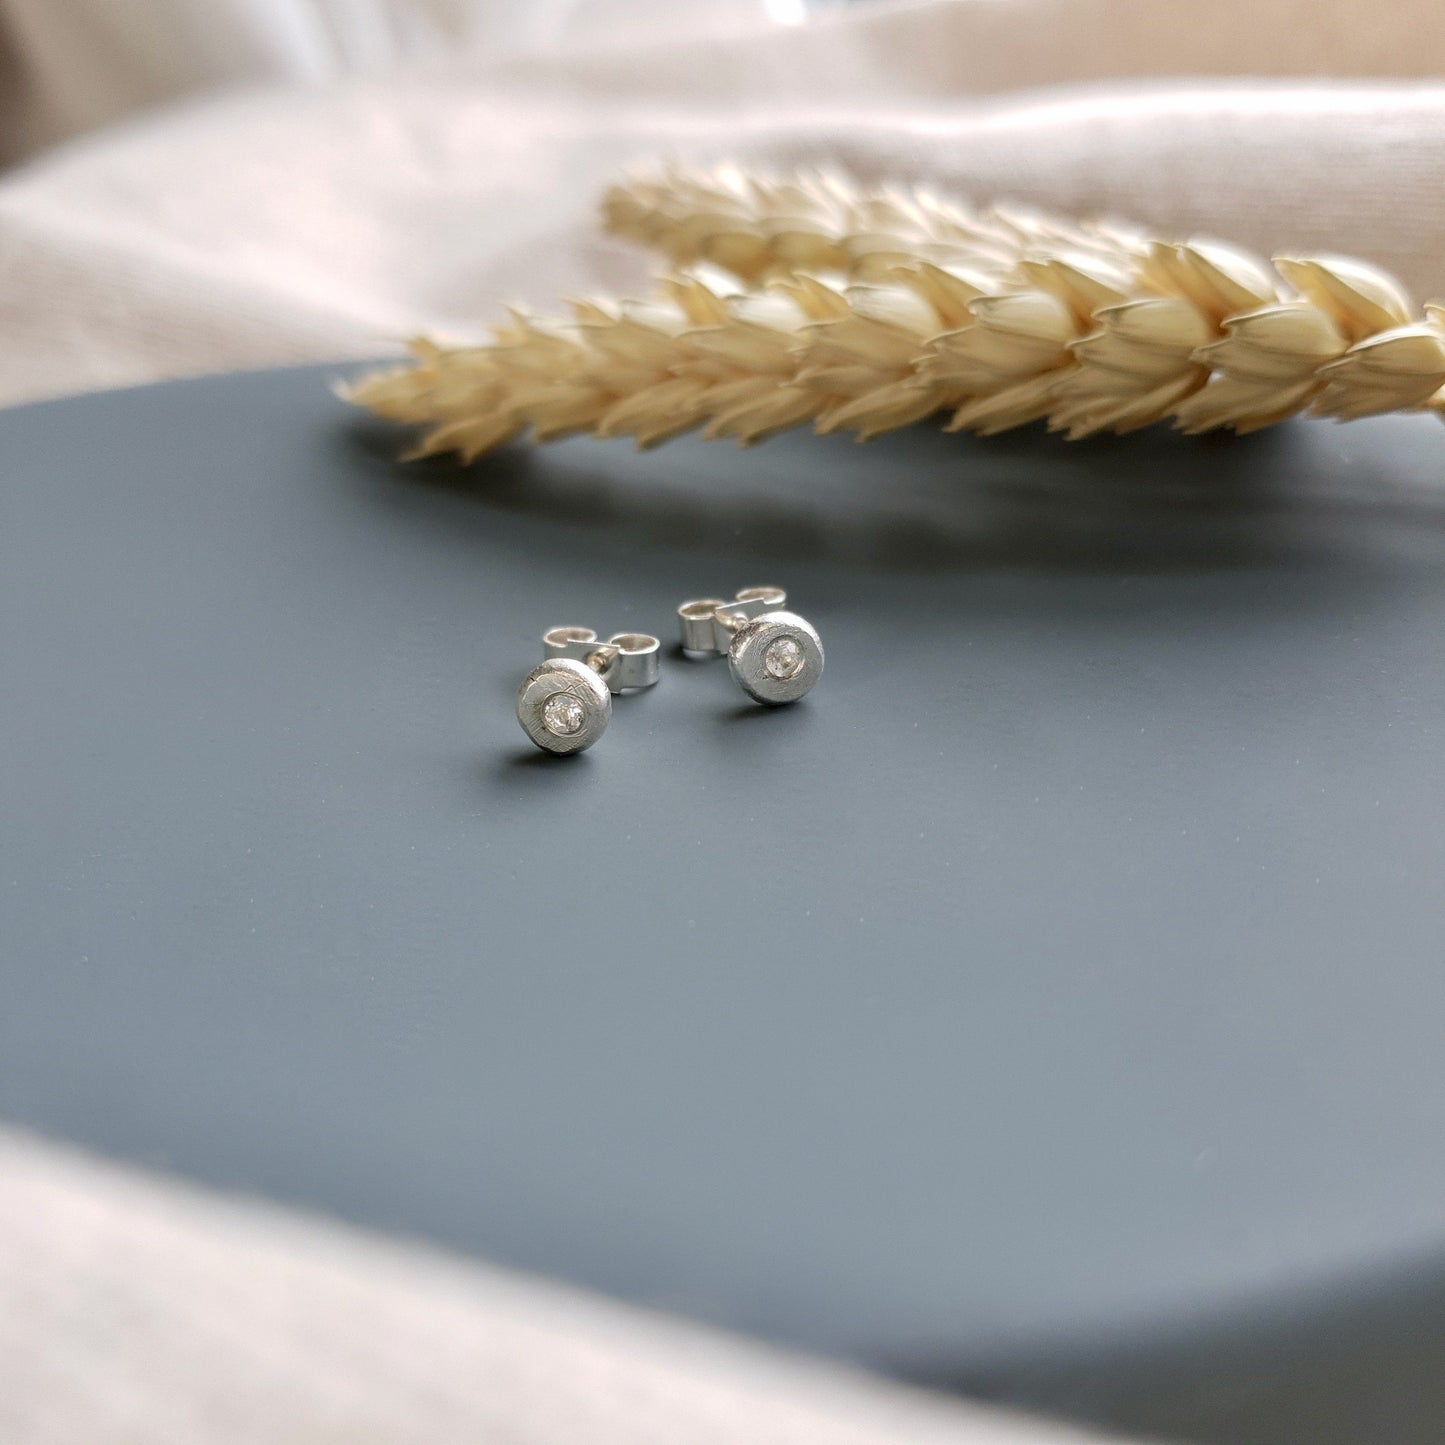 White Topaz & Silver Studs Earrings Handmade by Anna Calvert Jewellery in the UK